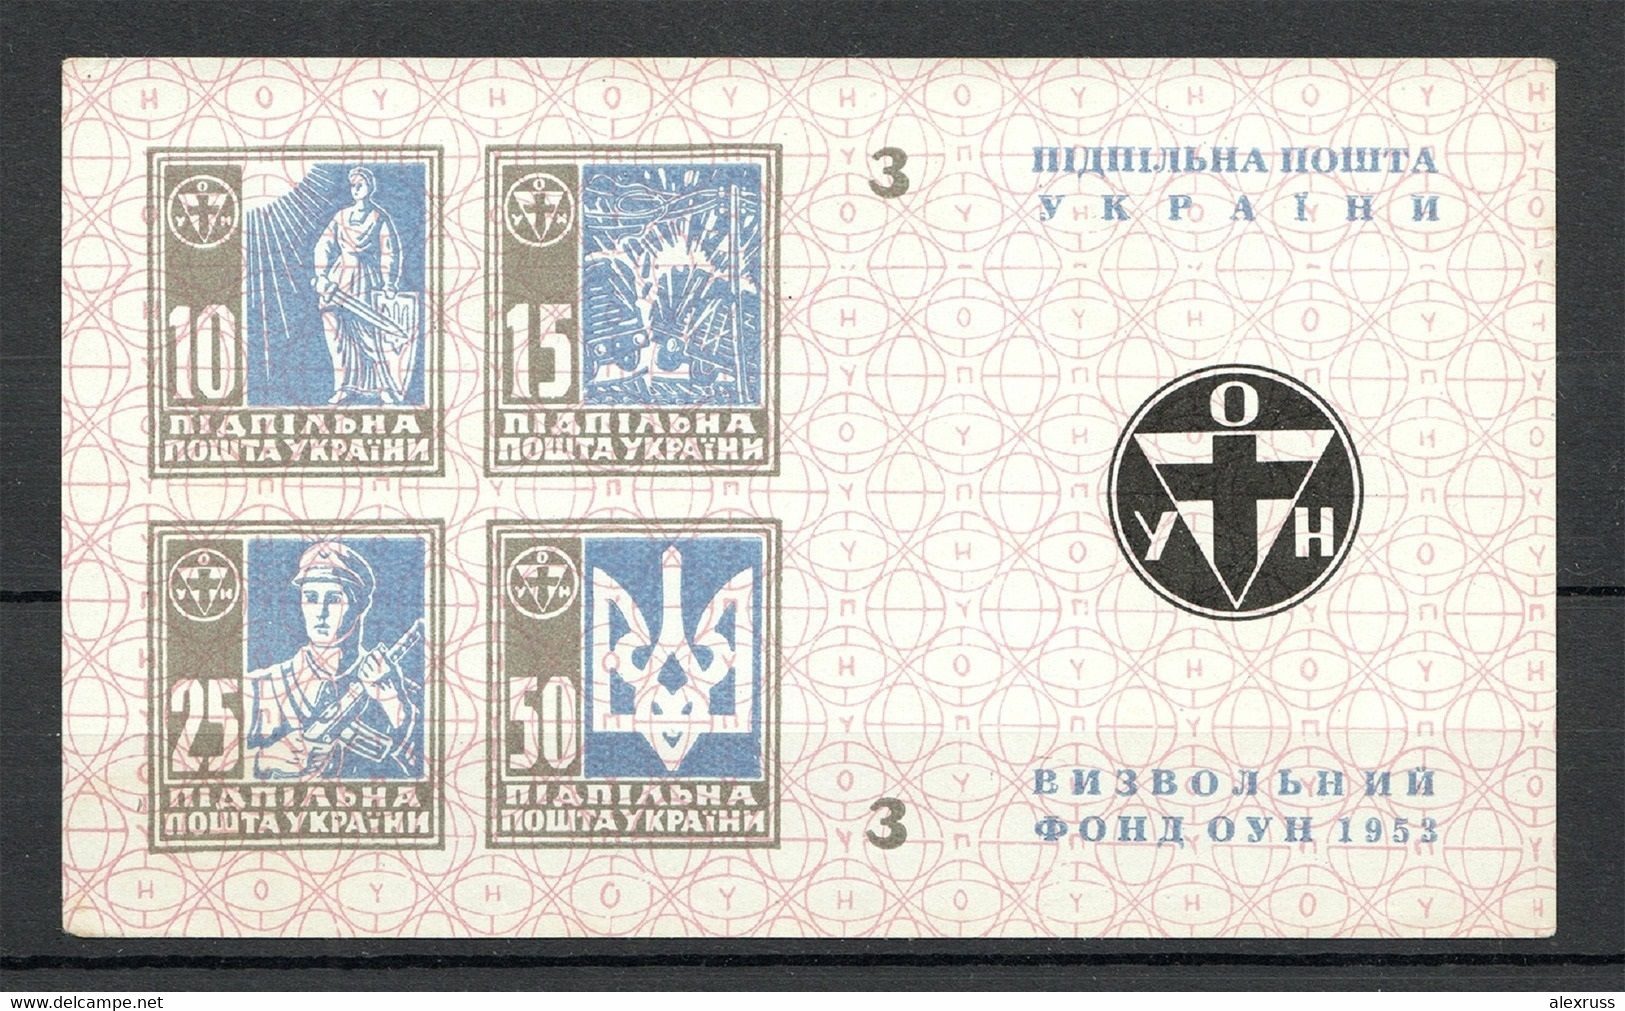 Ukraine 1953 ОУН Liberation Fund, Underground Post Block Sheet # 3, VF MNH** (LTSK) - Ucrania & Ucrania Occidental